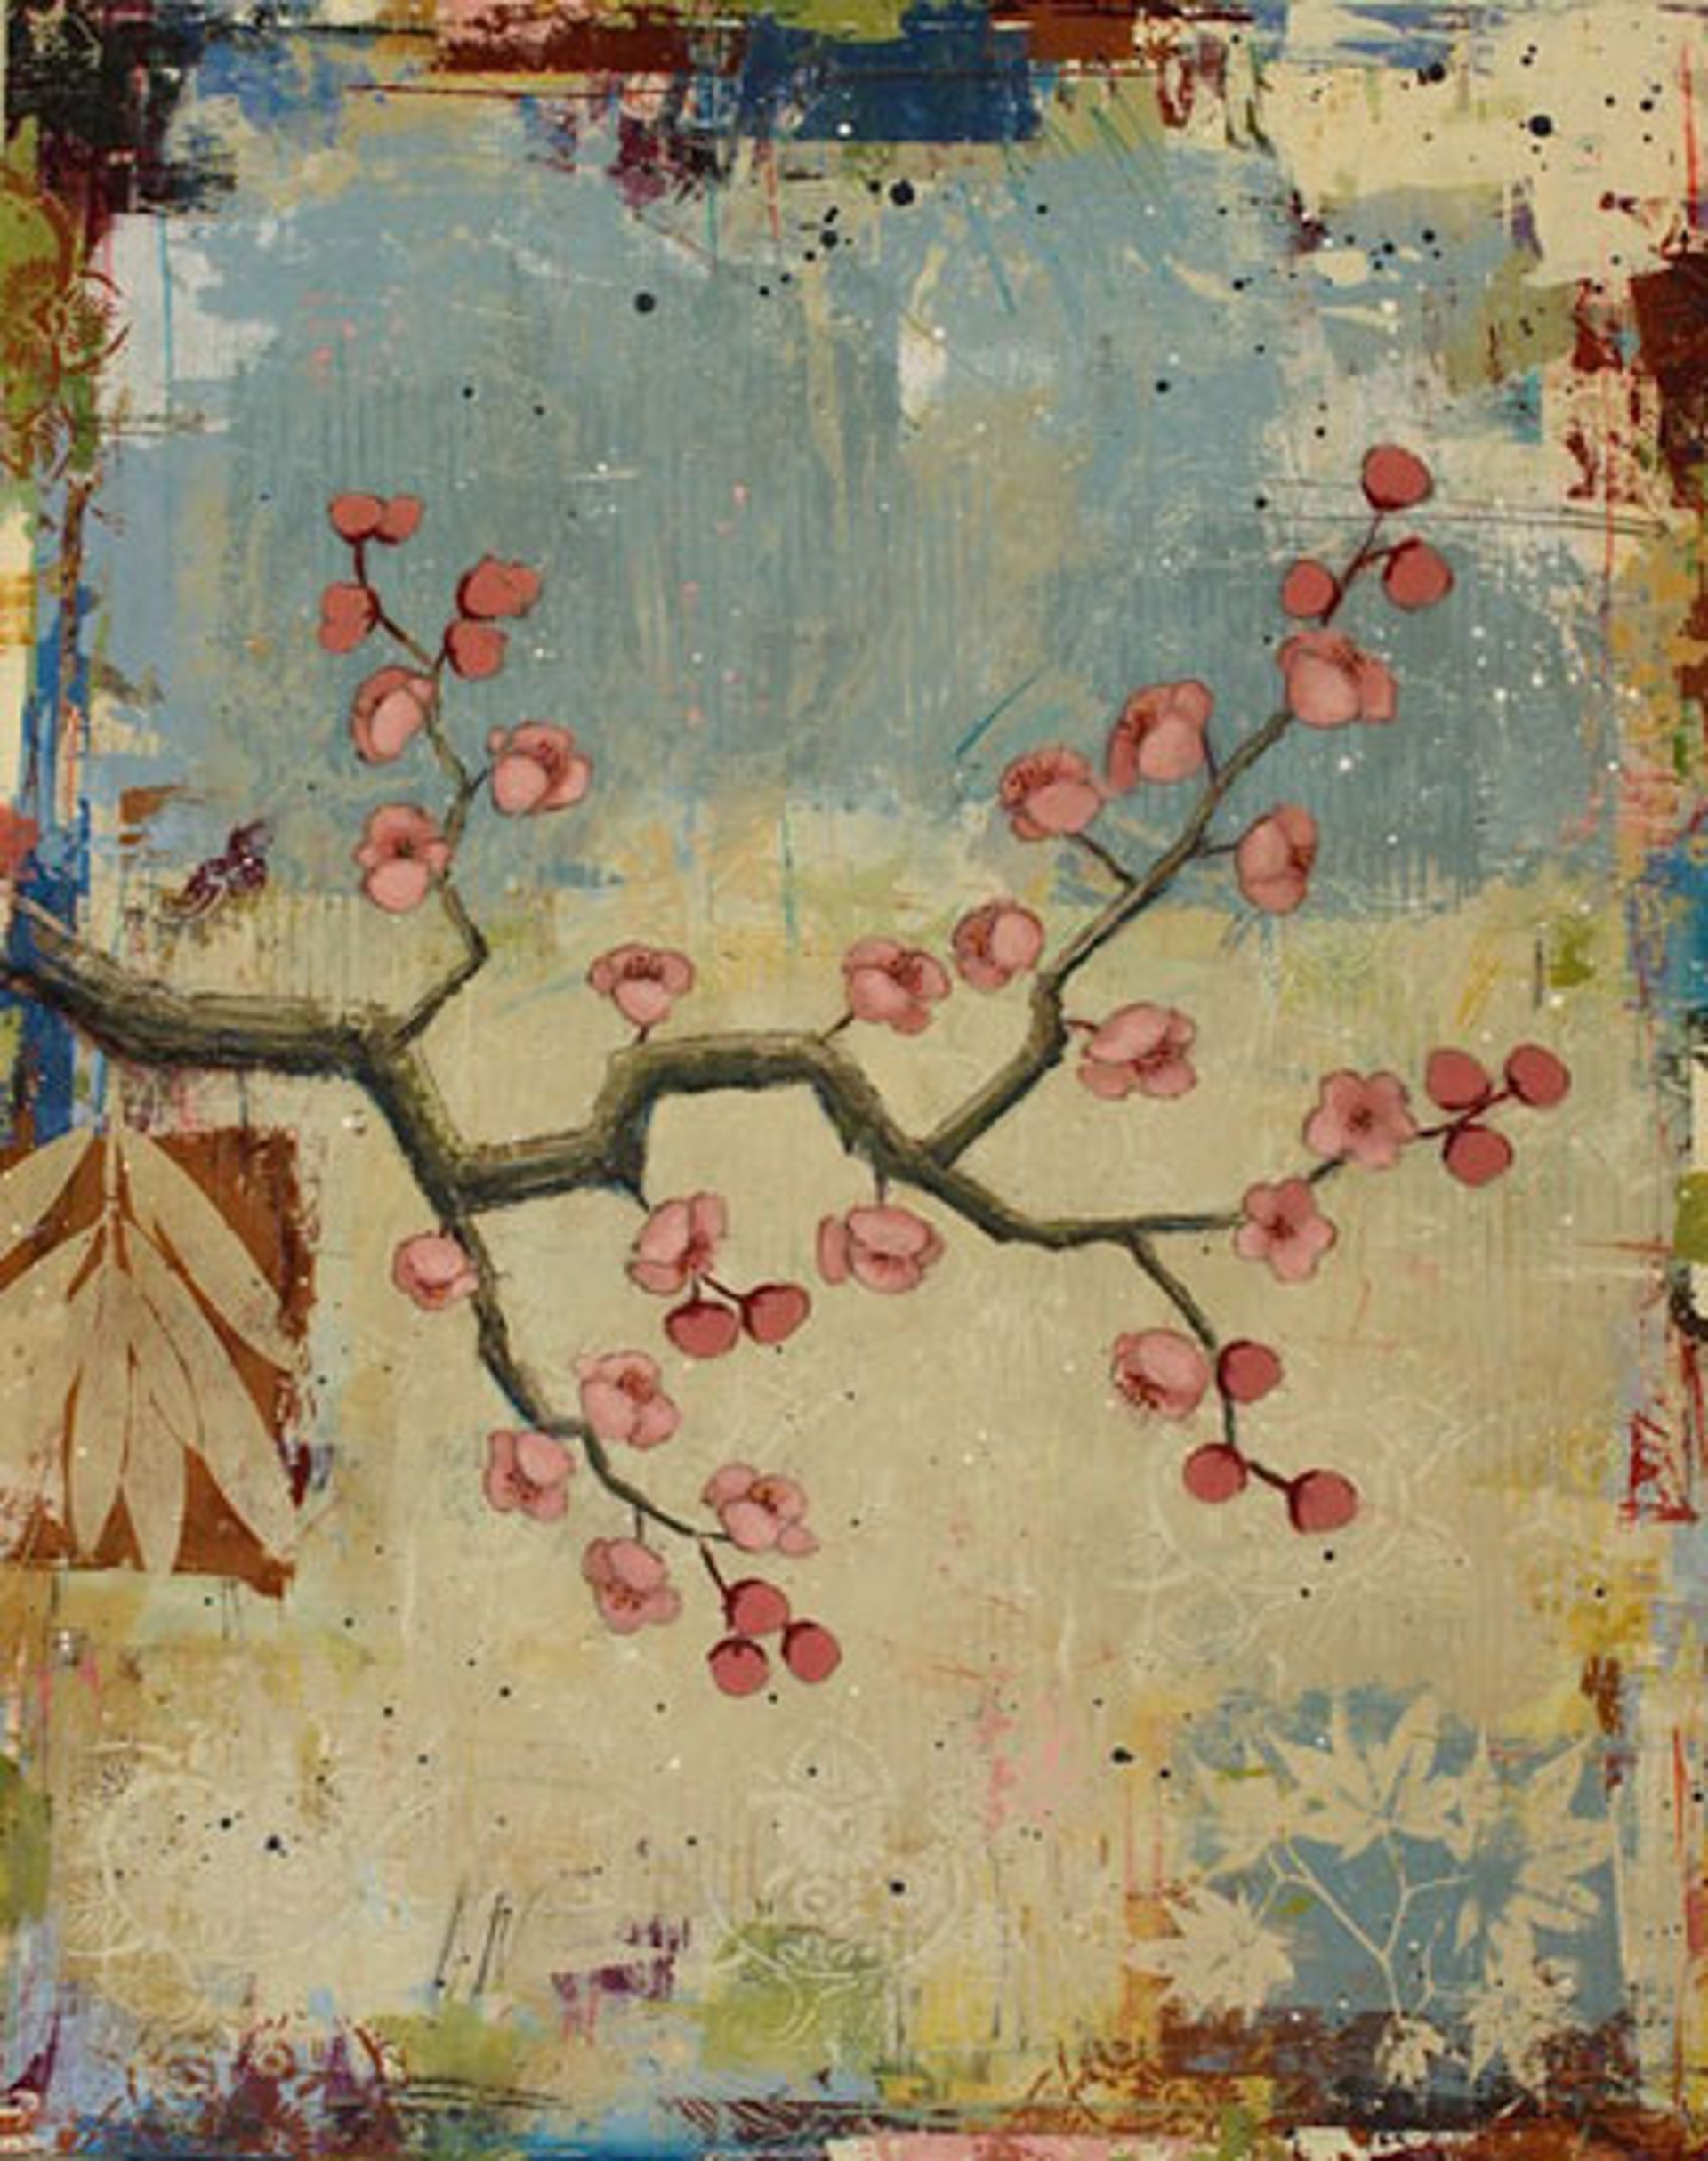 Flowering Cherry #3 by Paul Brigham